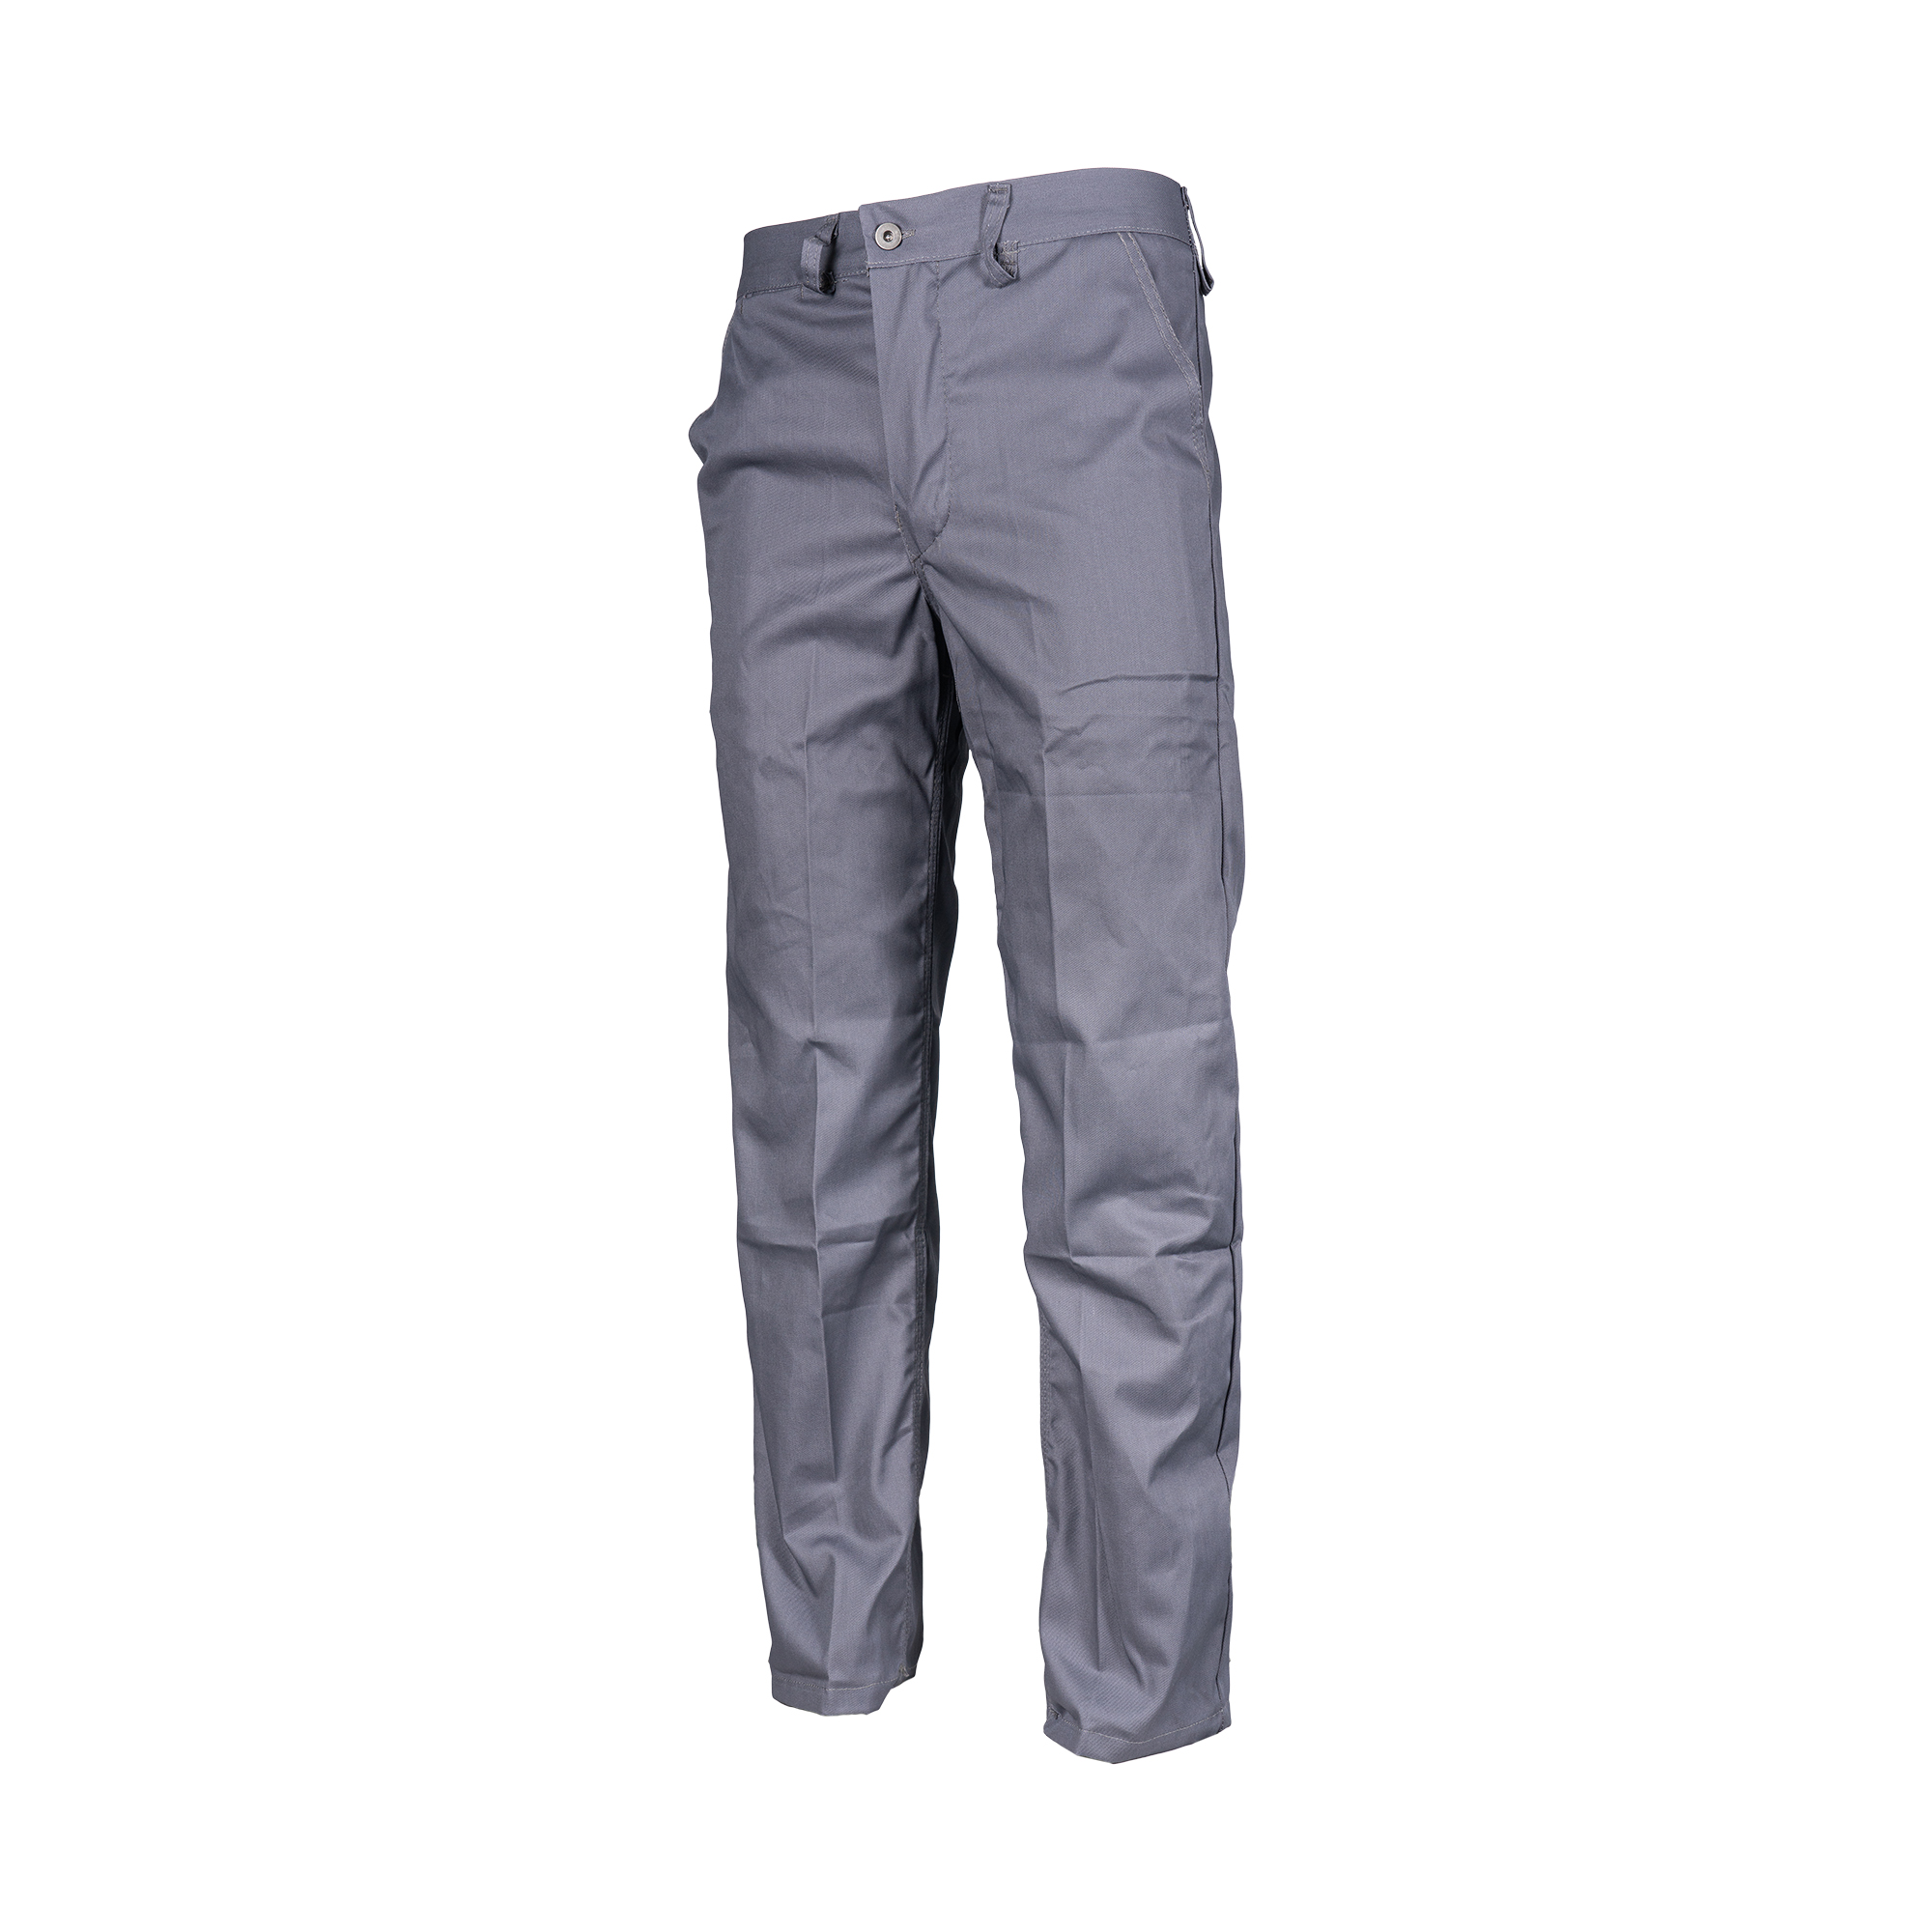 Titan Trouser Grey - Protekta Safety Gear